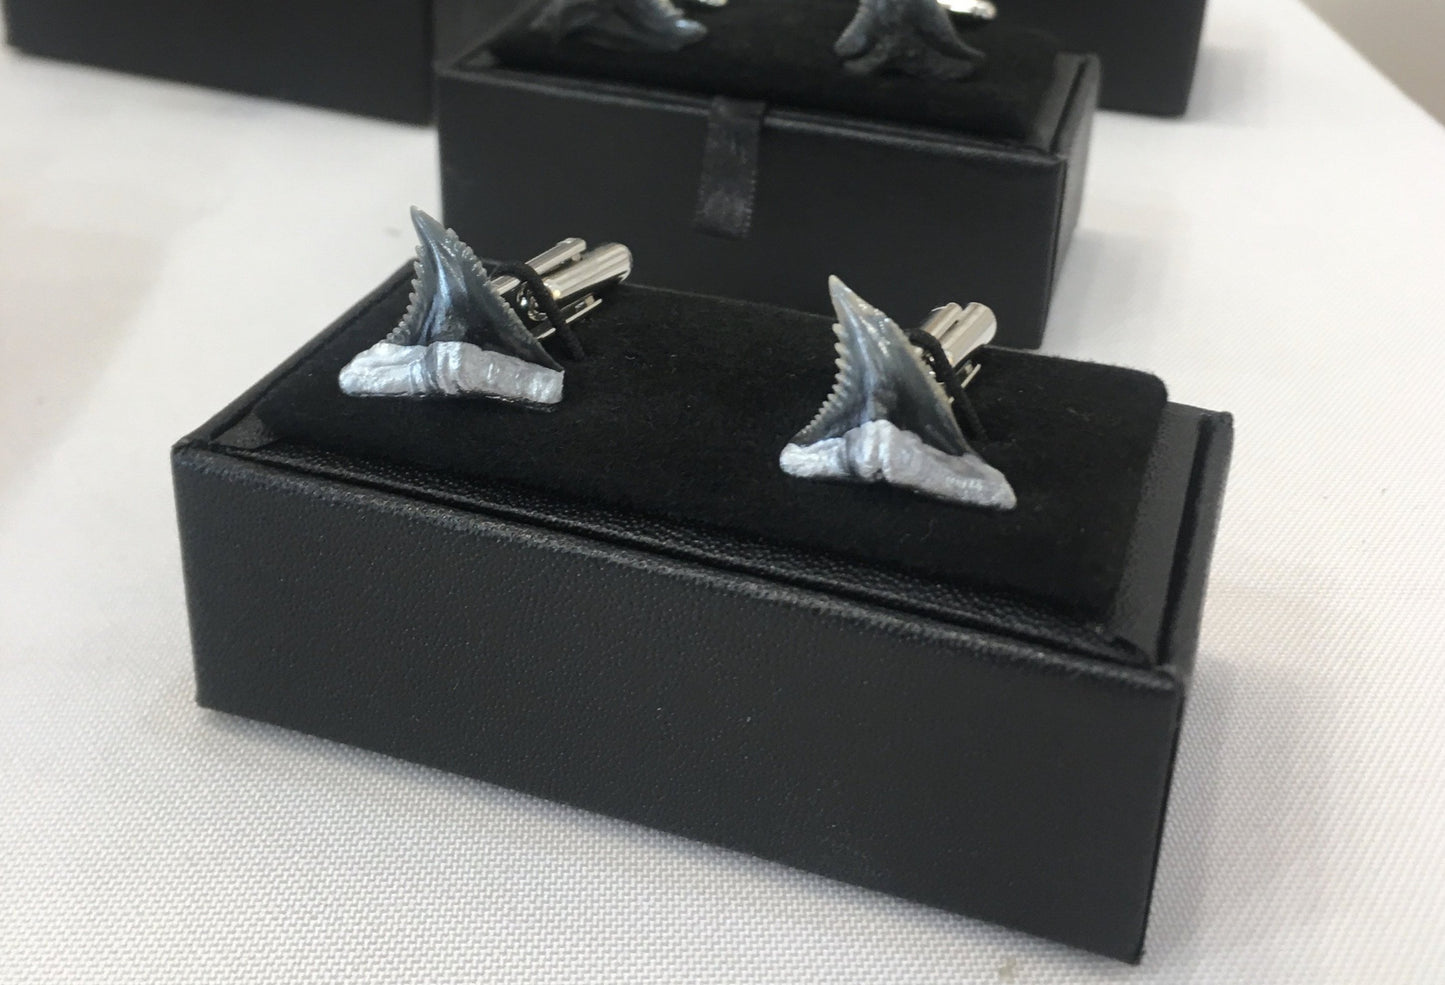 Shark Tooth Cufflinks - Silver - Foxy Fossils